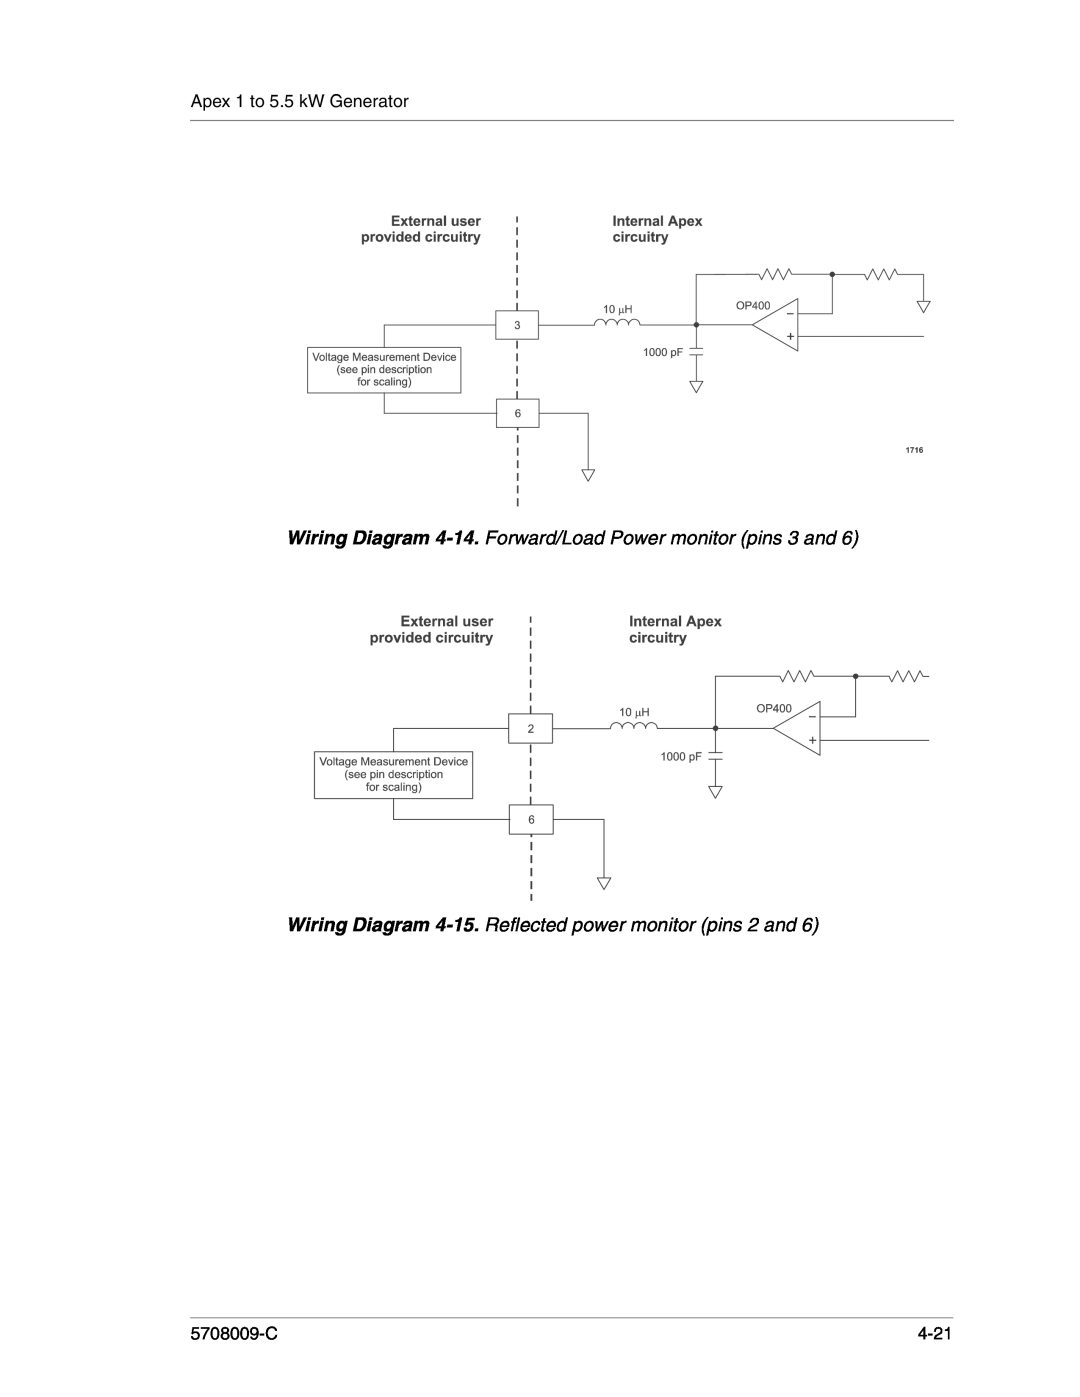 Apex Digital 5708009-C manual Wiring Diagram 4-14. Forward/Load Power monitor pins 3 and, Apex 1 to 5.5 kW Generator, 4-21 